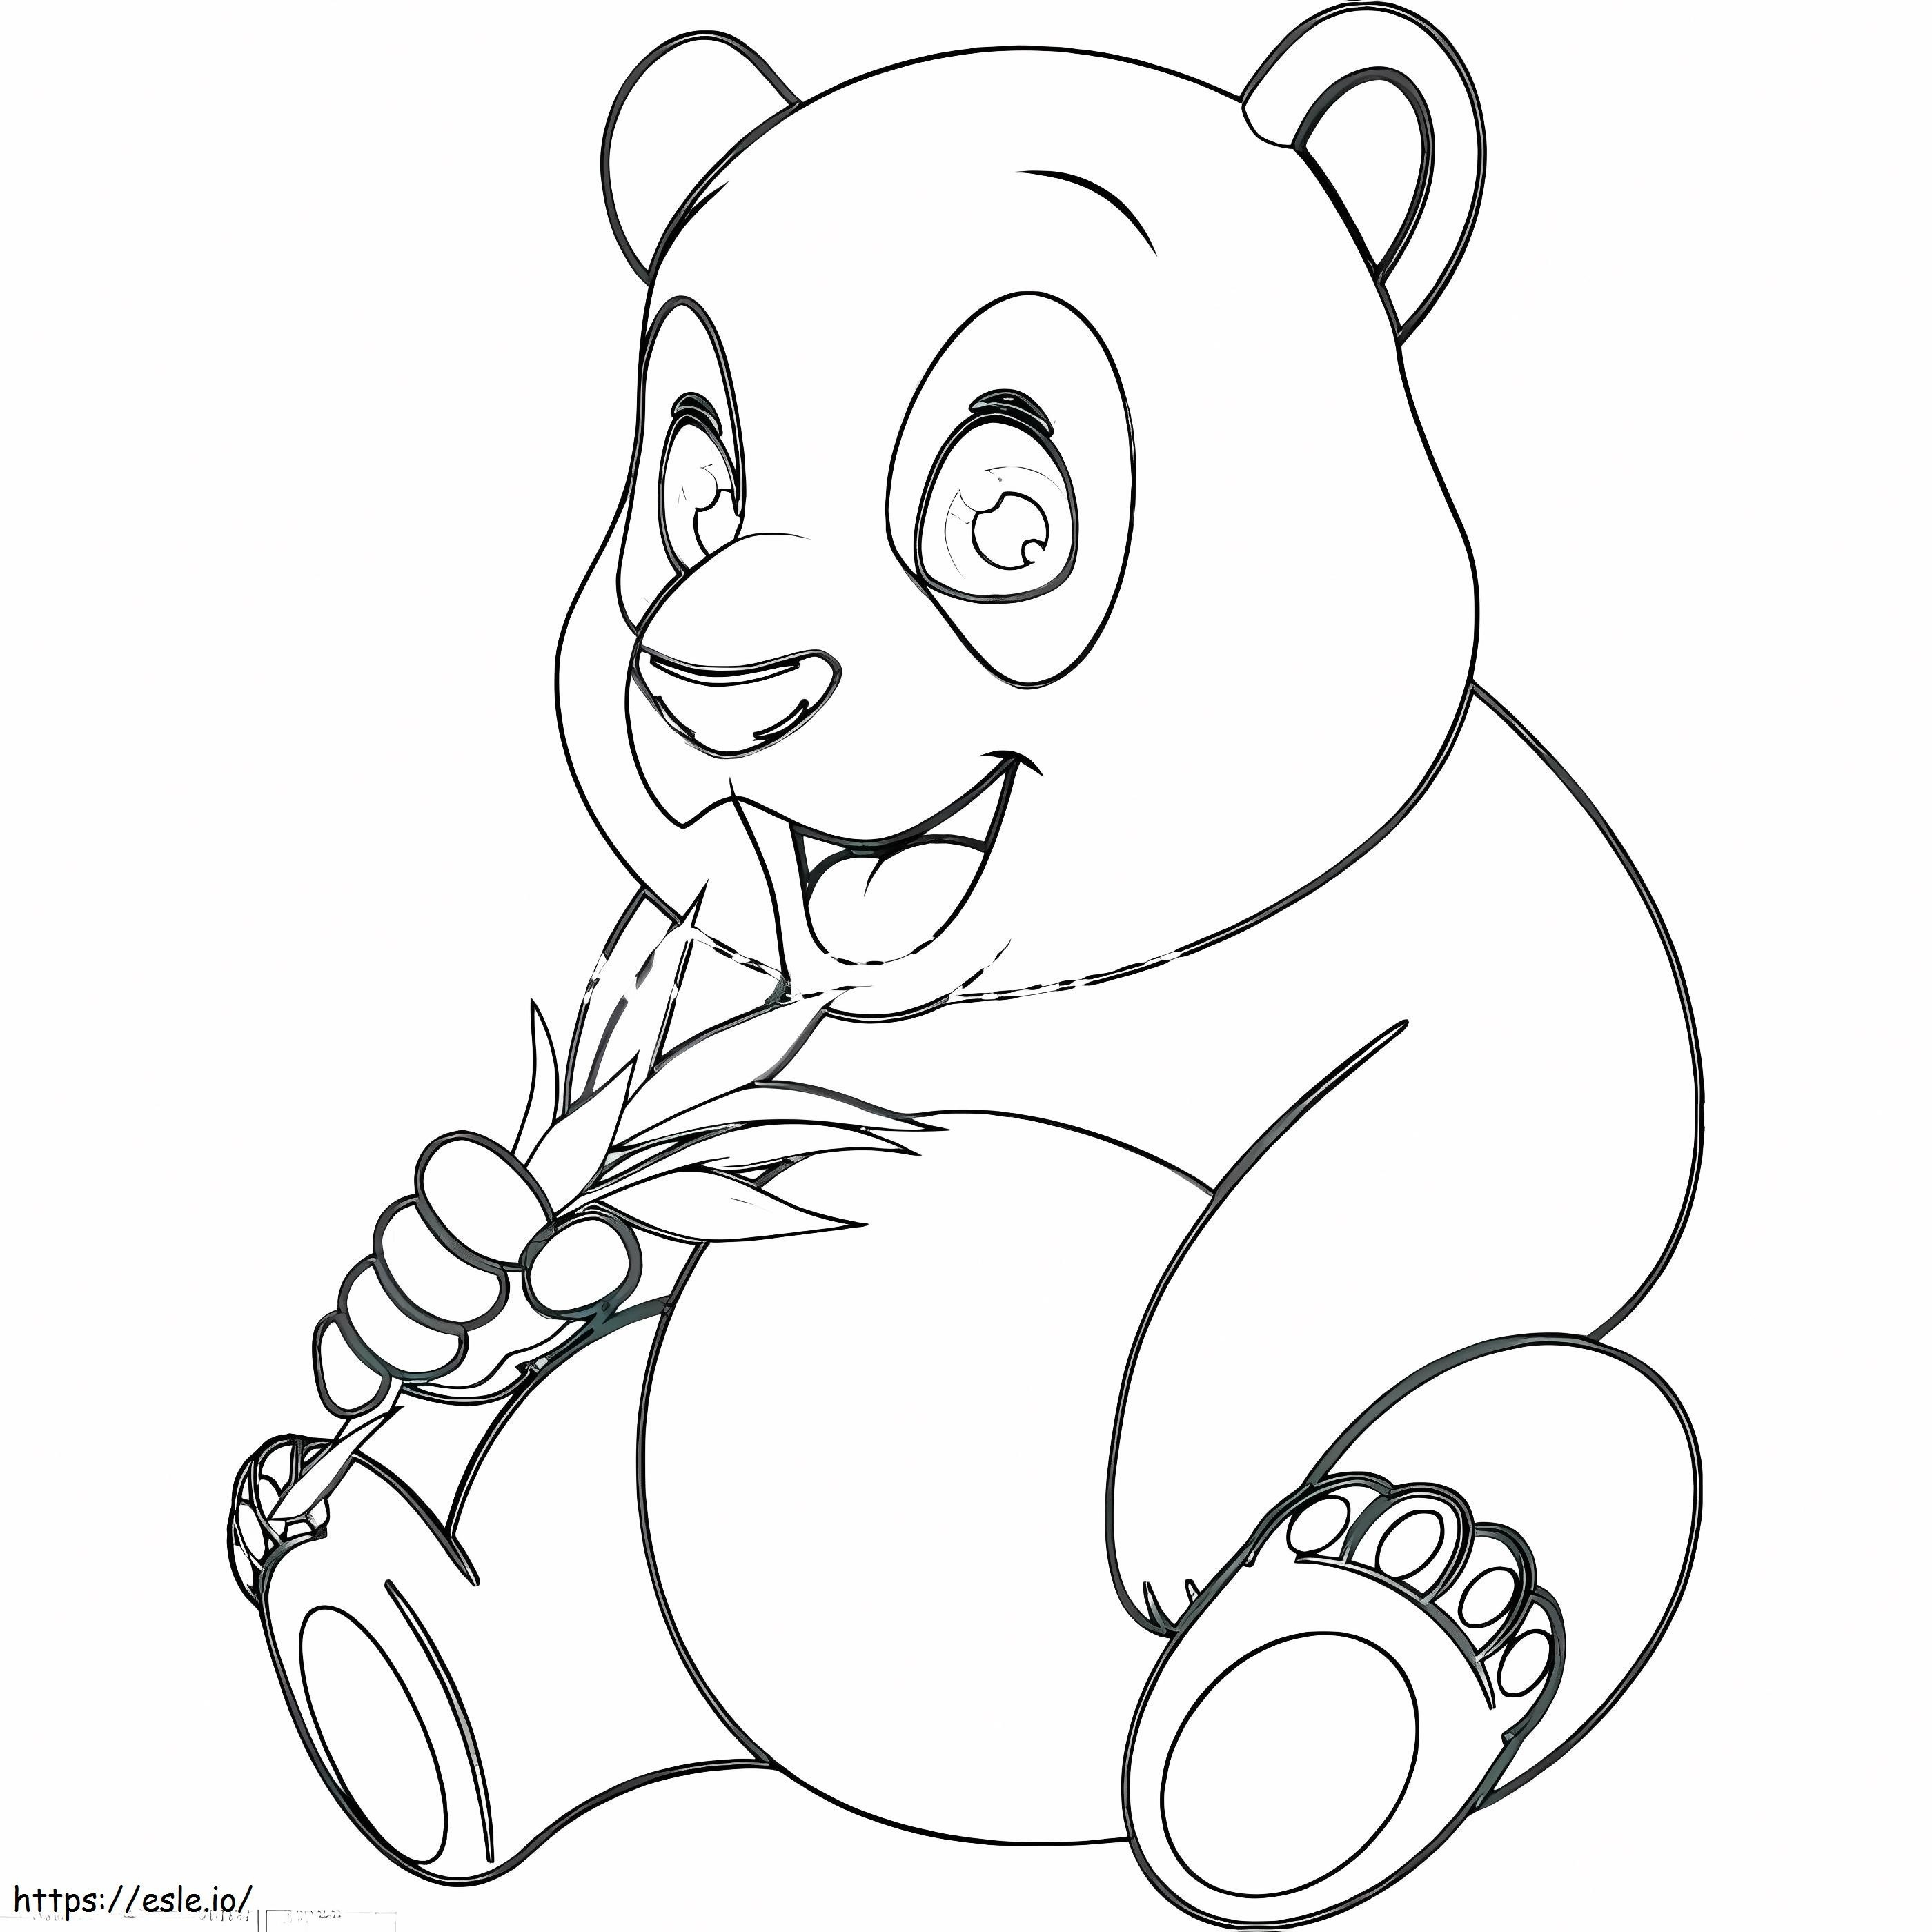 Normal Panda coloring page